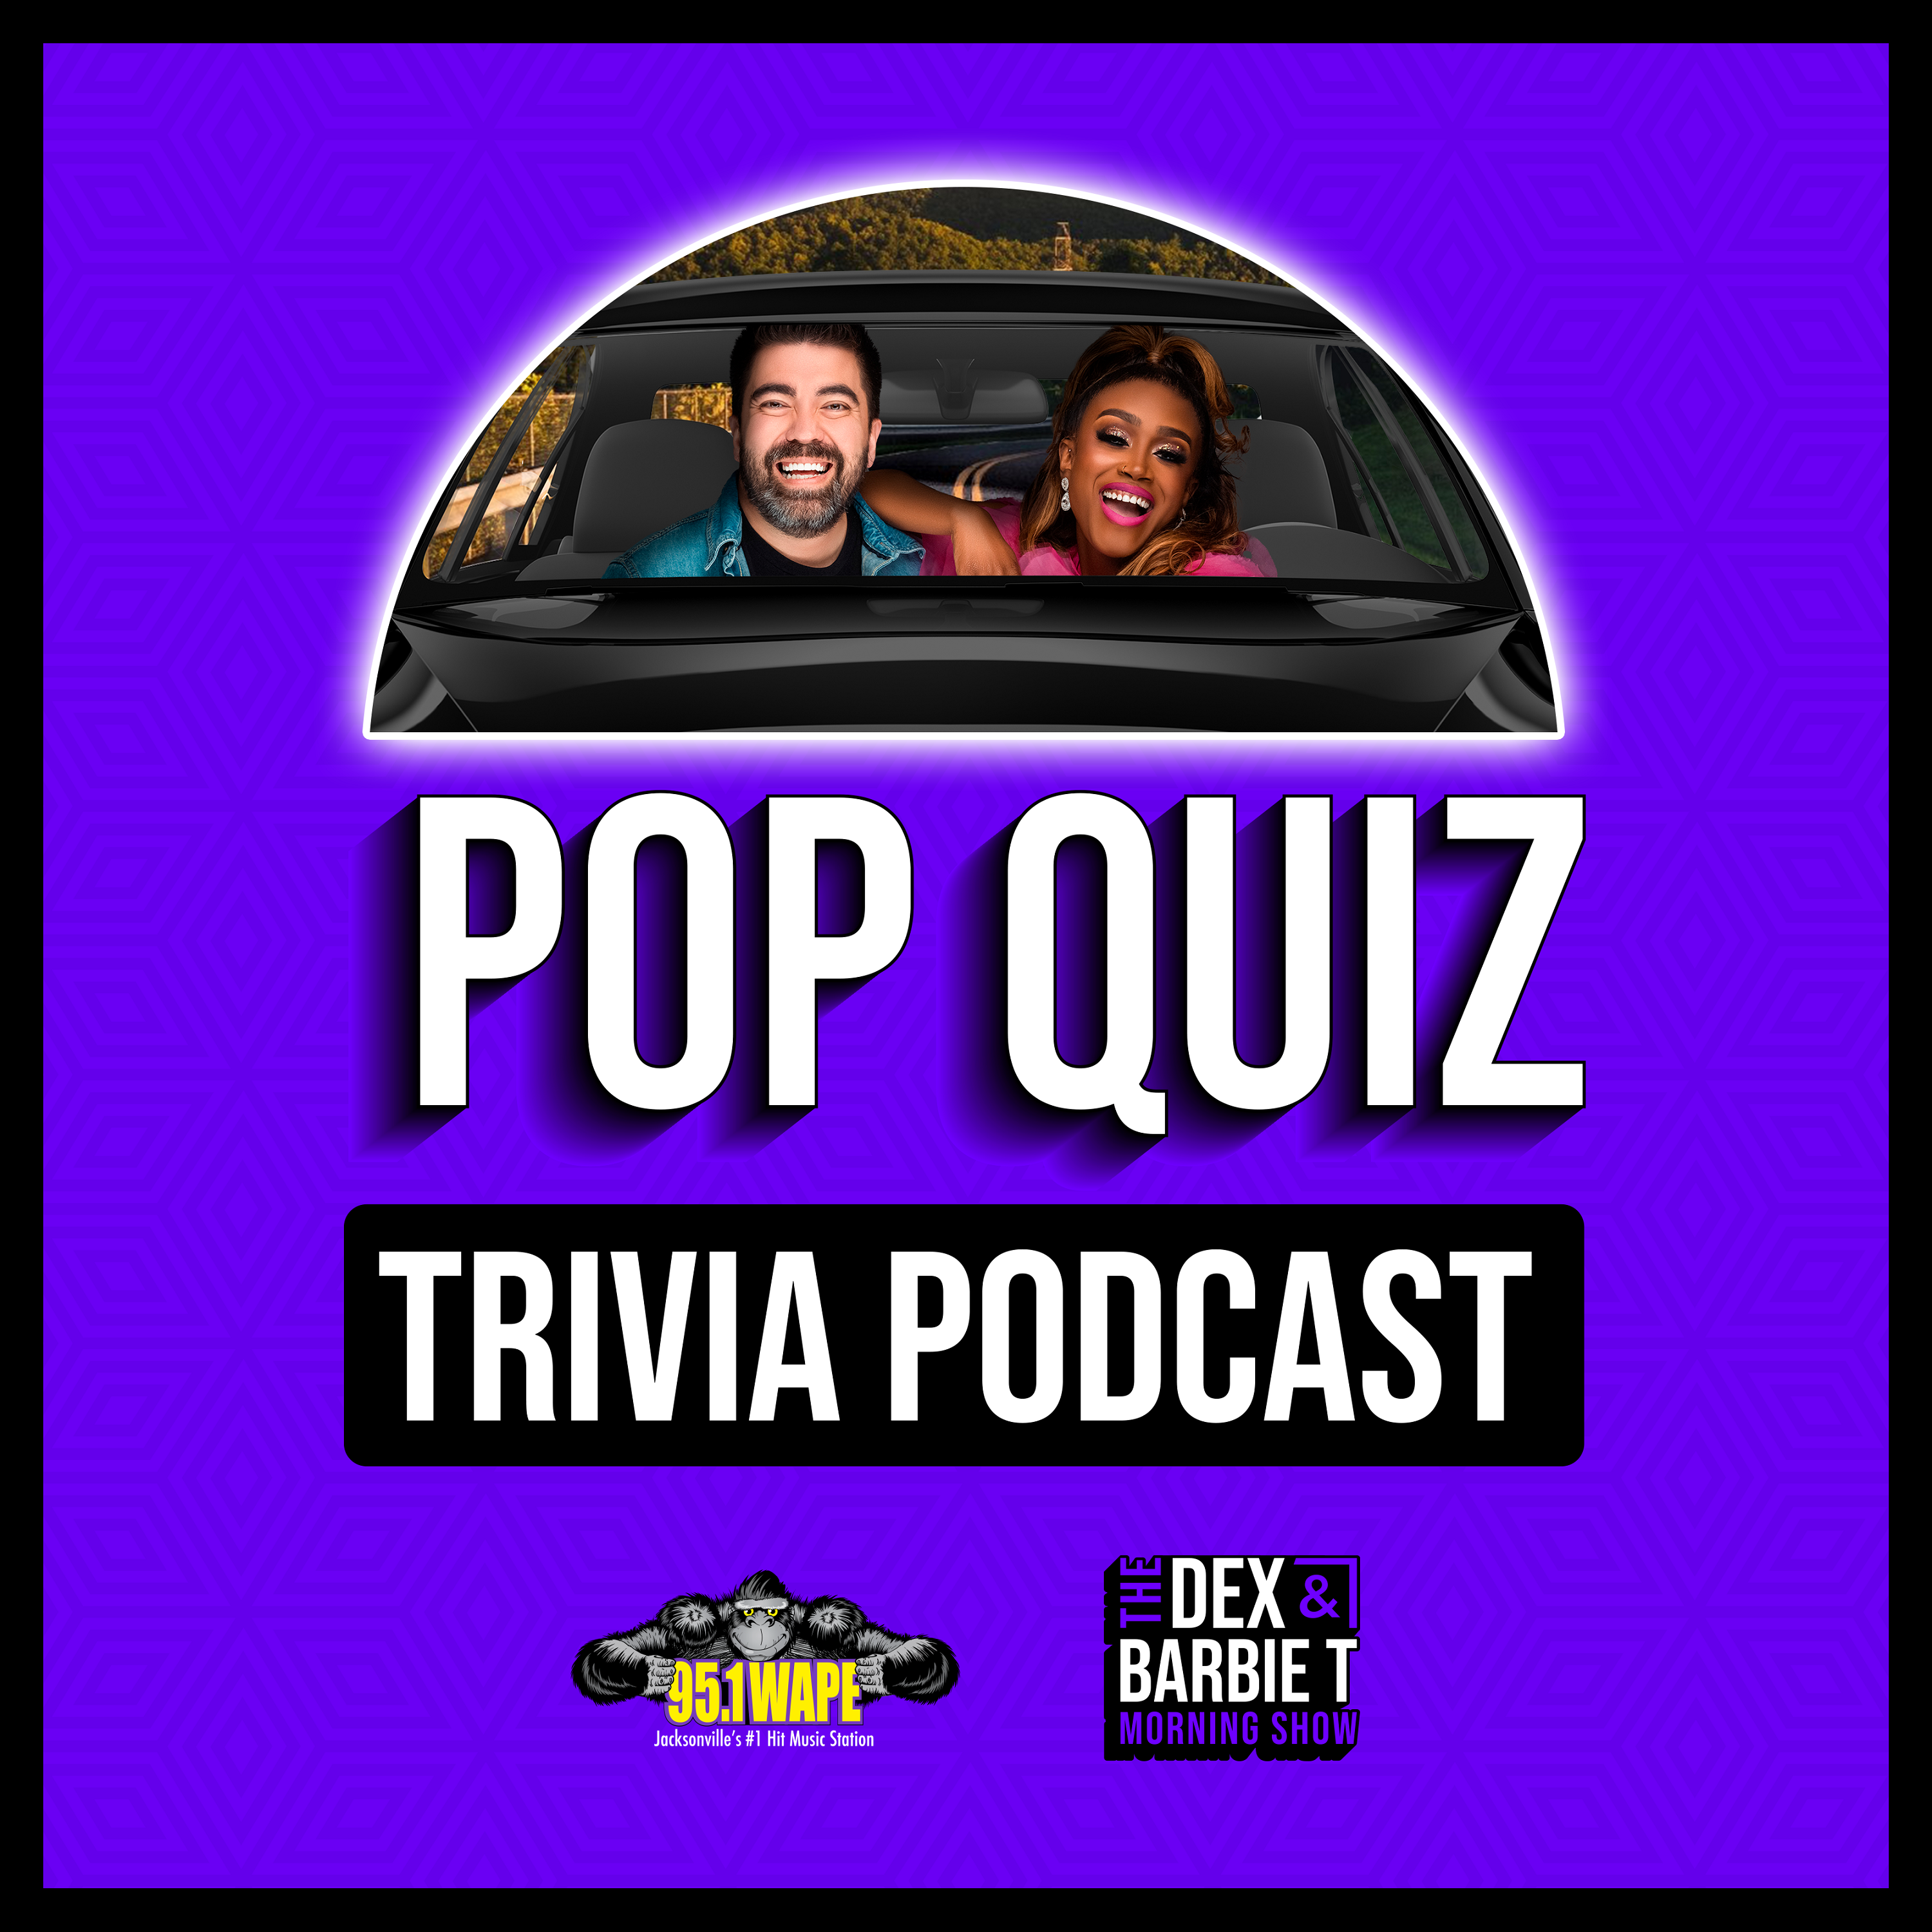 Dex & Barbie T Pop Quiz Trivia Podcast